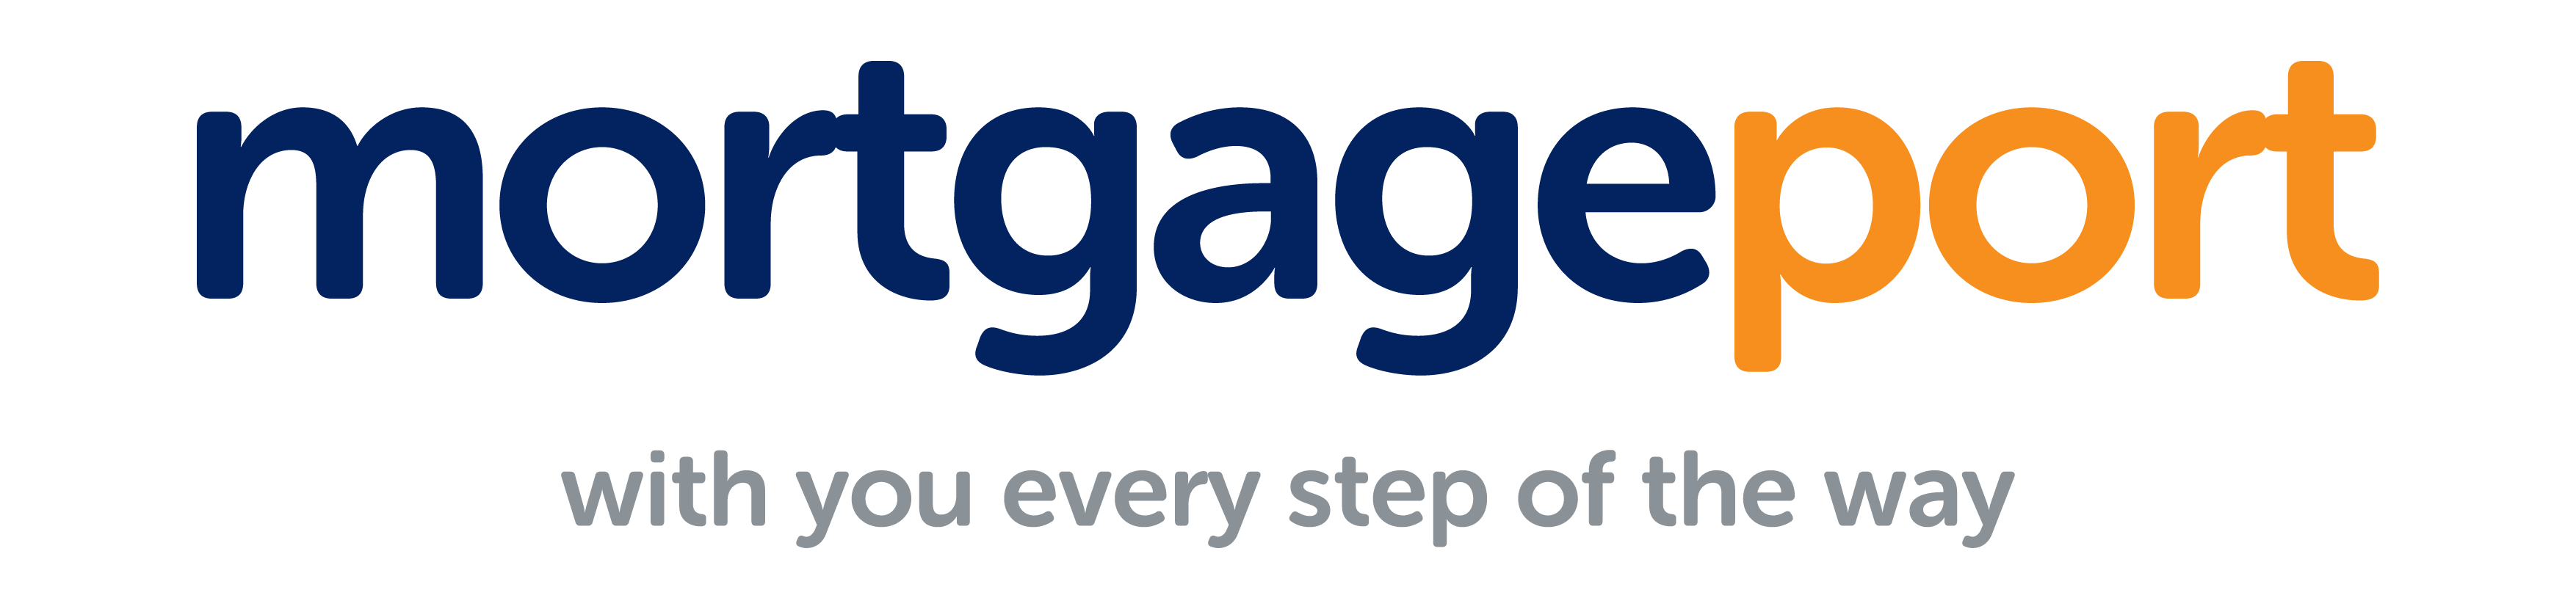 Mortgageport logo